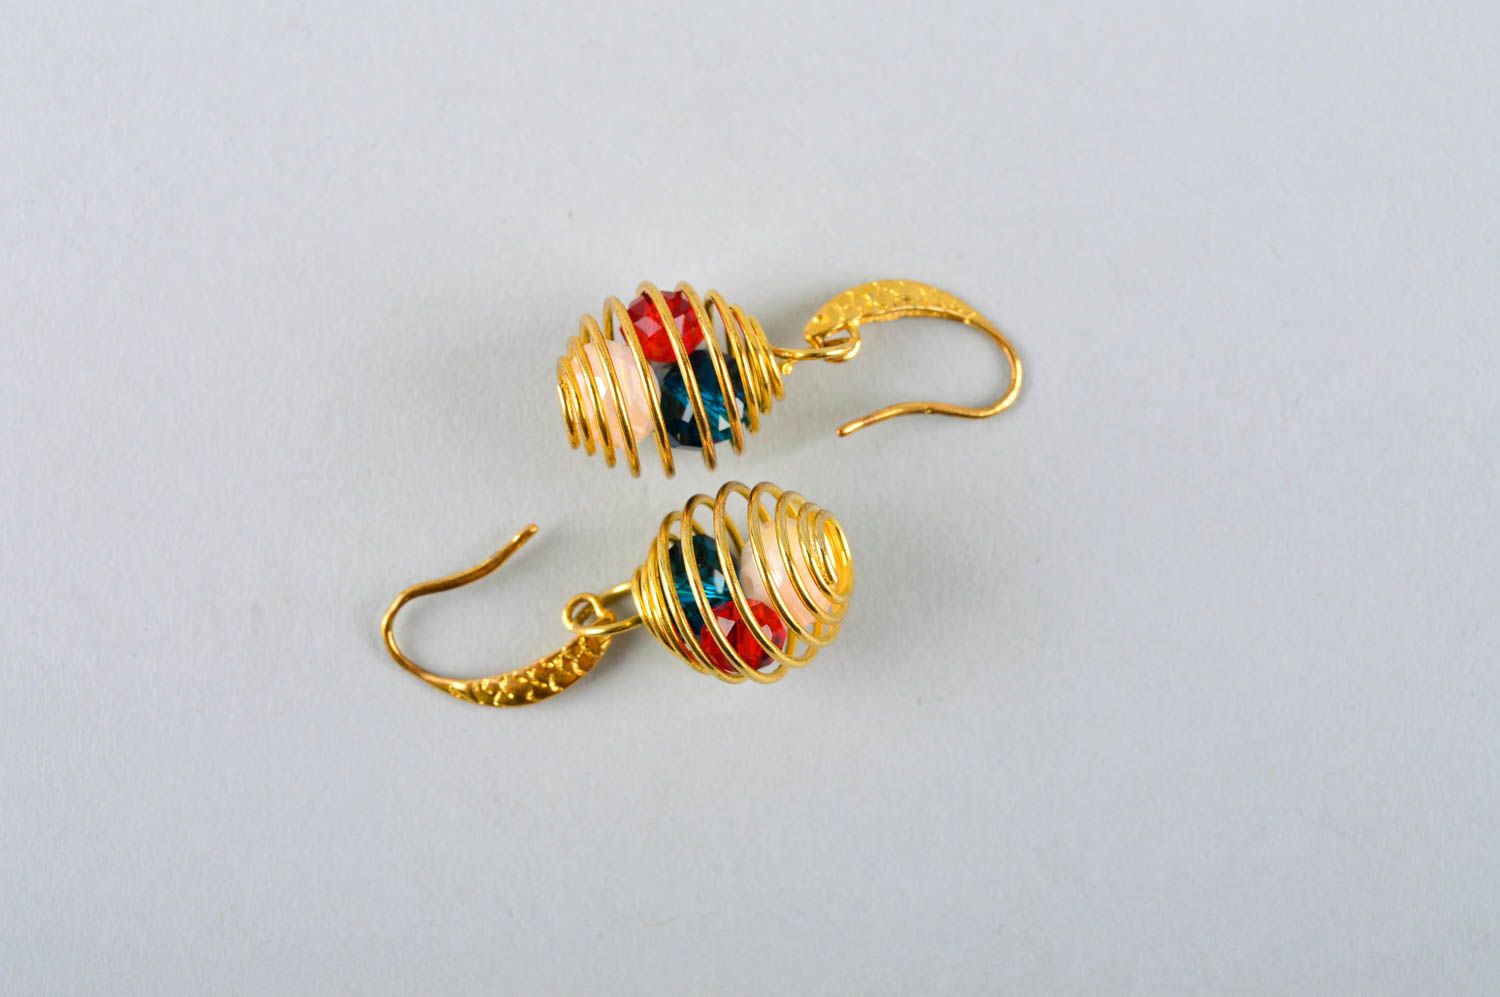 Cute earrings designer jewelry handmade earrings womens accessories gift ideas photo 4